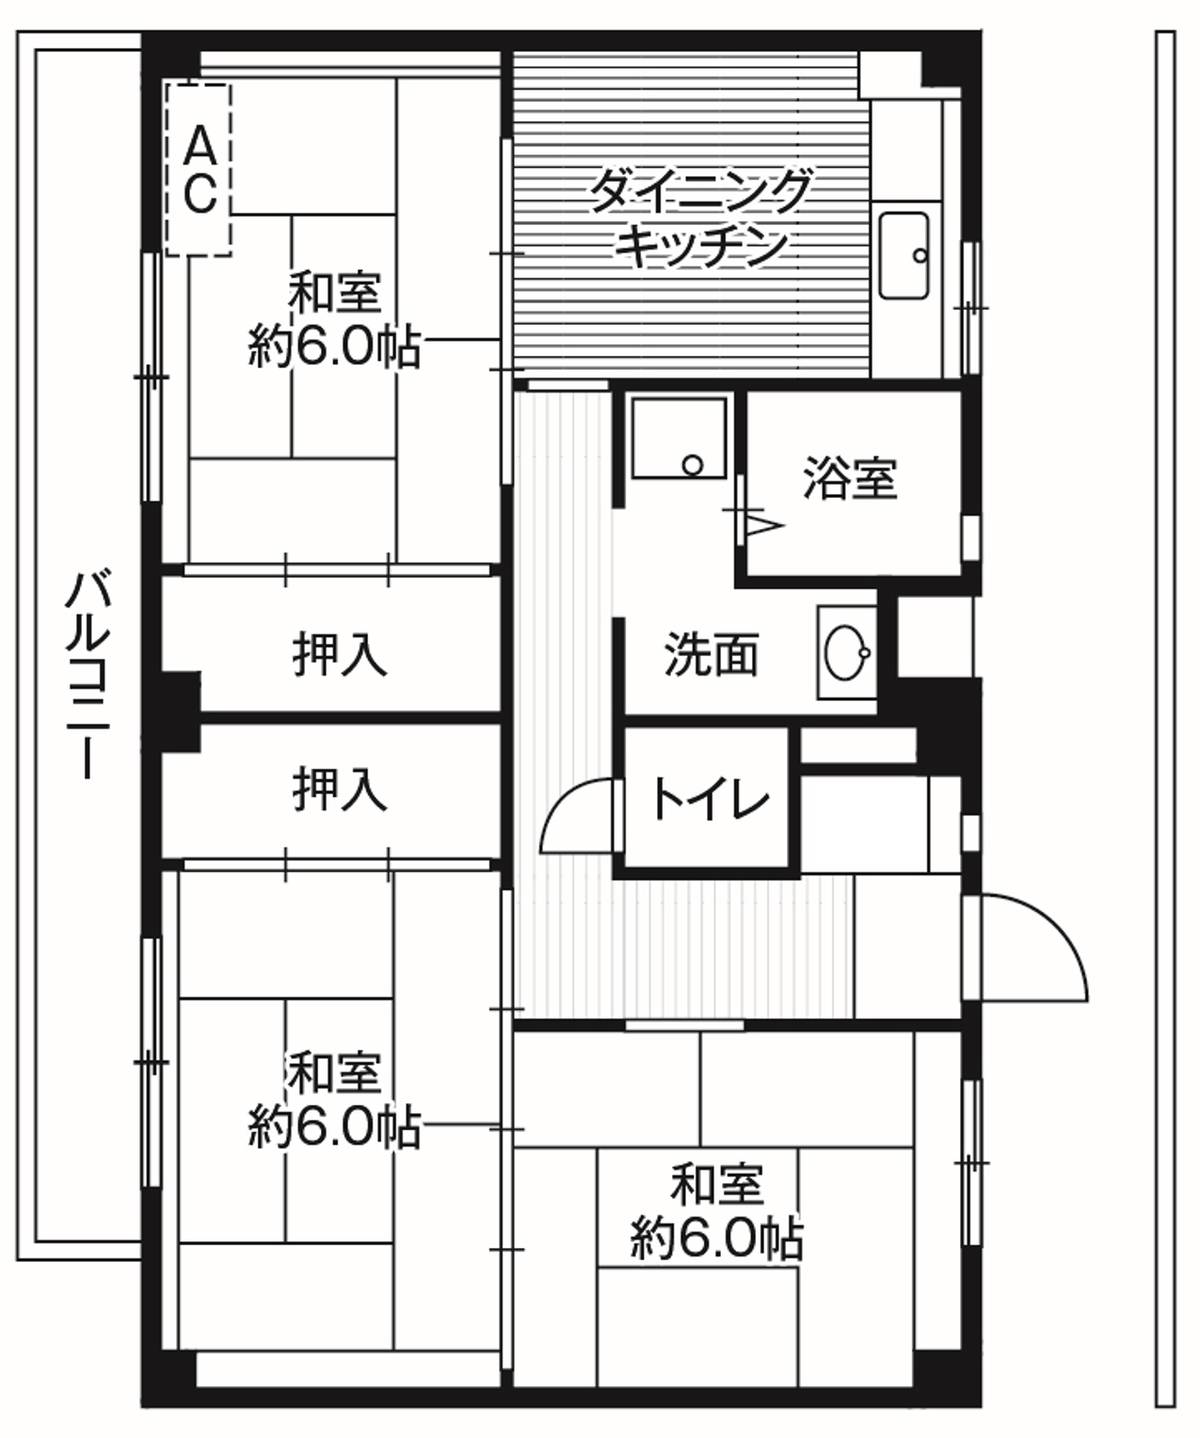 3DK floorplan of Village House Zenbu in Asahi-ku